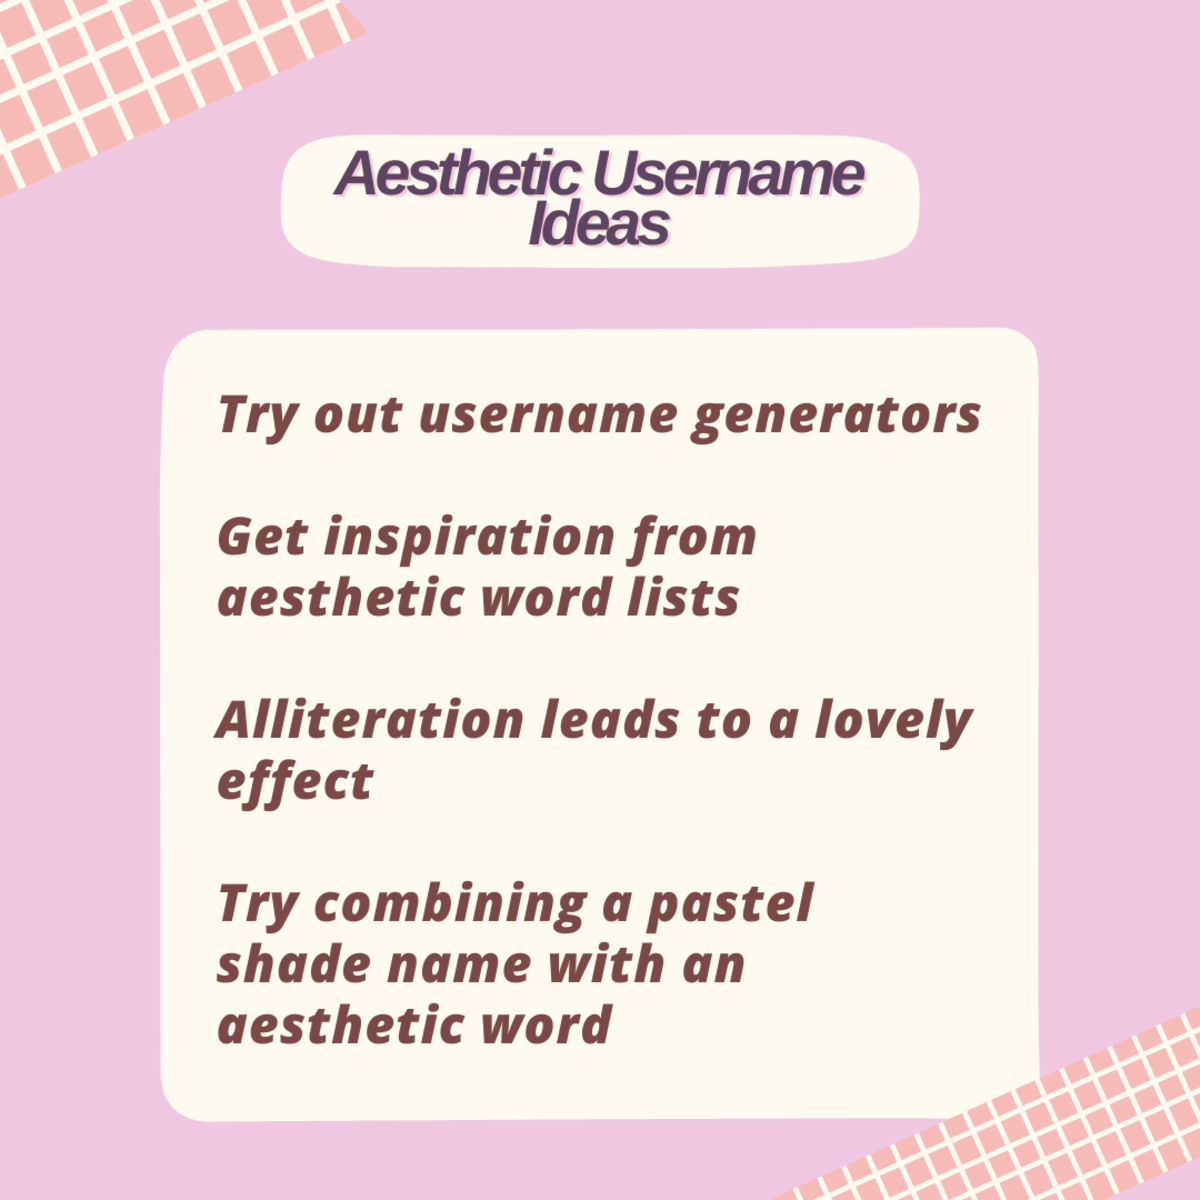 12 Aesthetic Usernames Ideas  The Ultimate List - 2